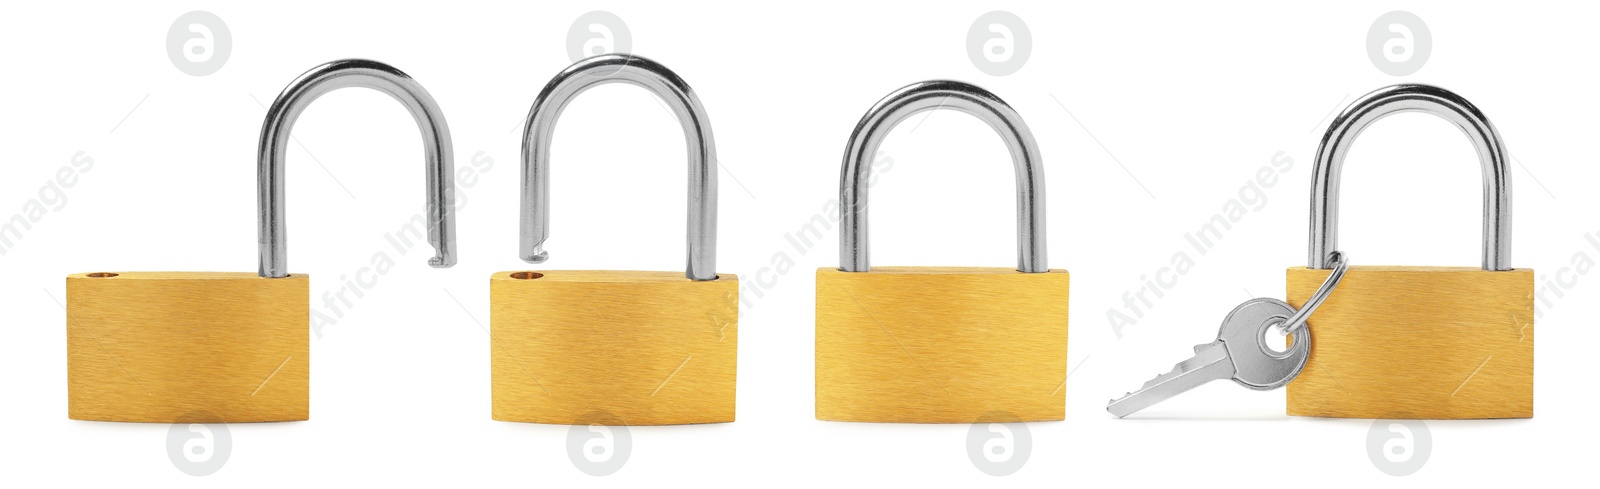 Image of New steel padlock isolated on white, set